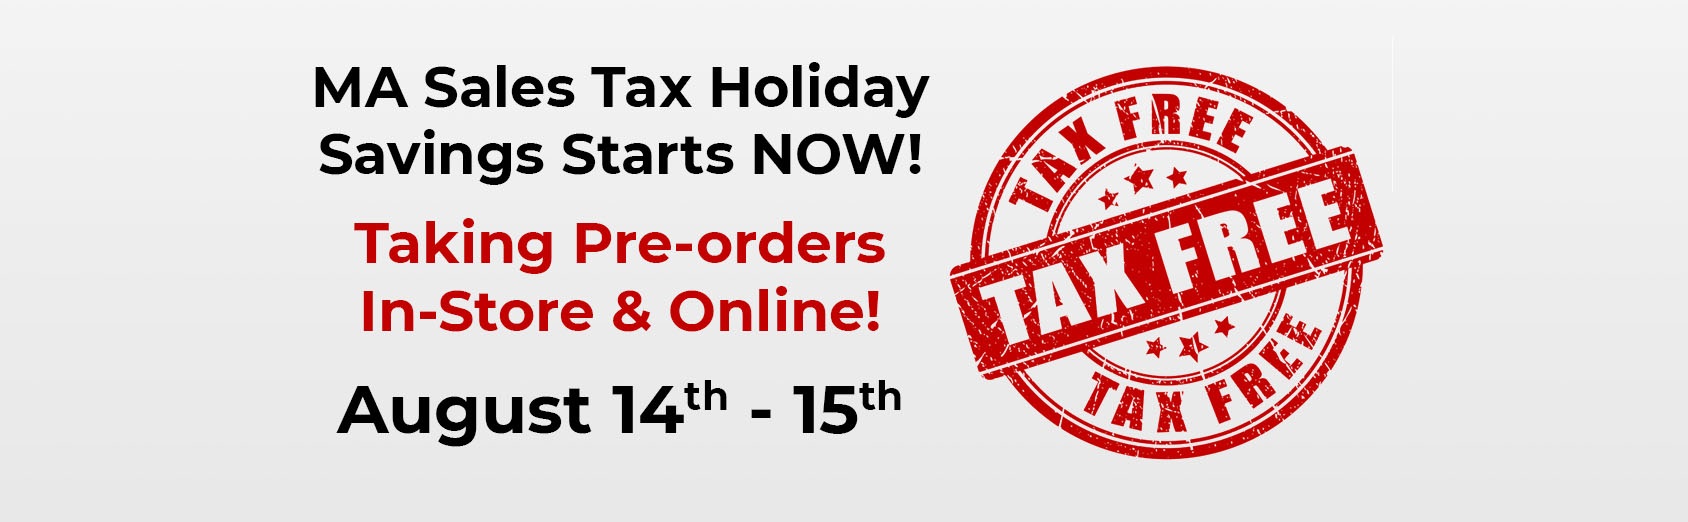 MA Sales Tax Holiday